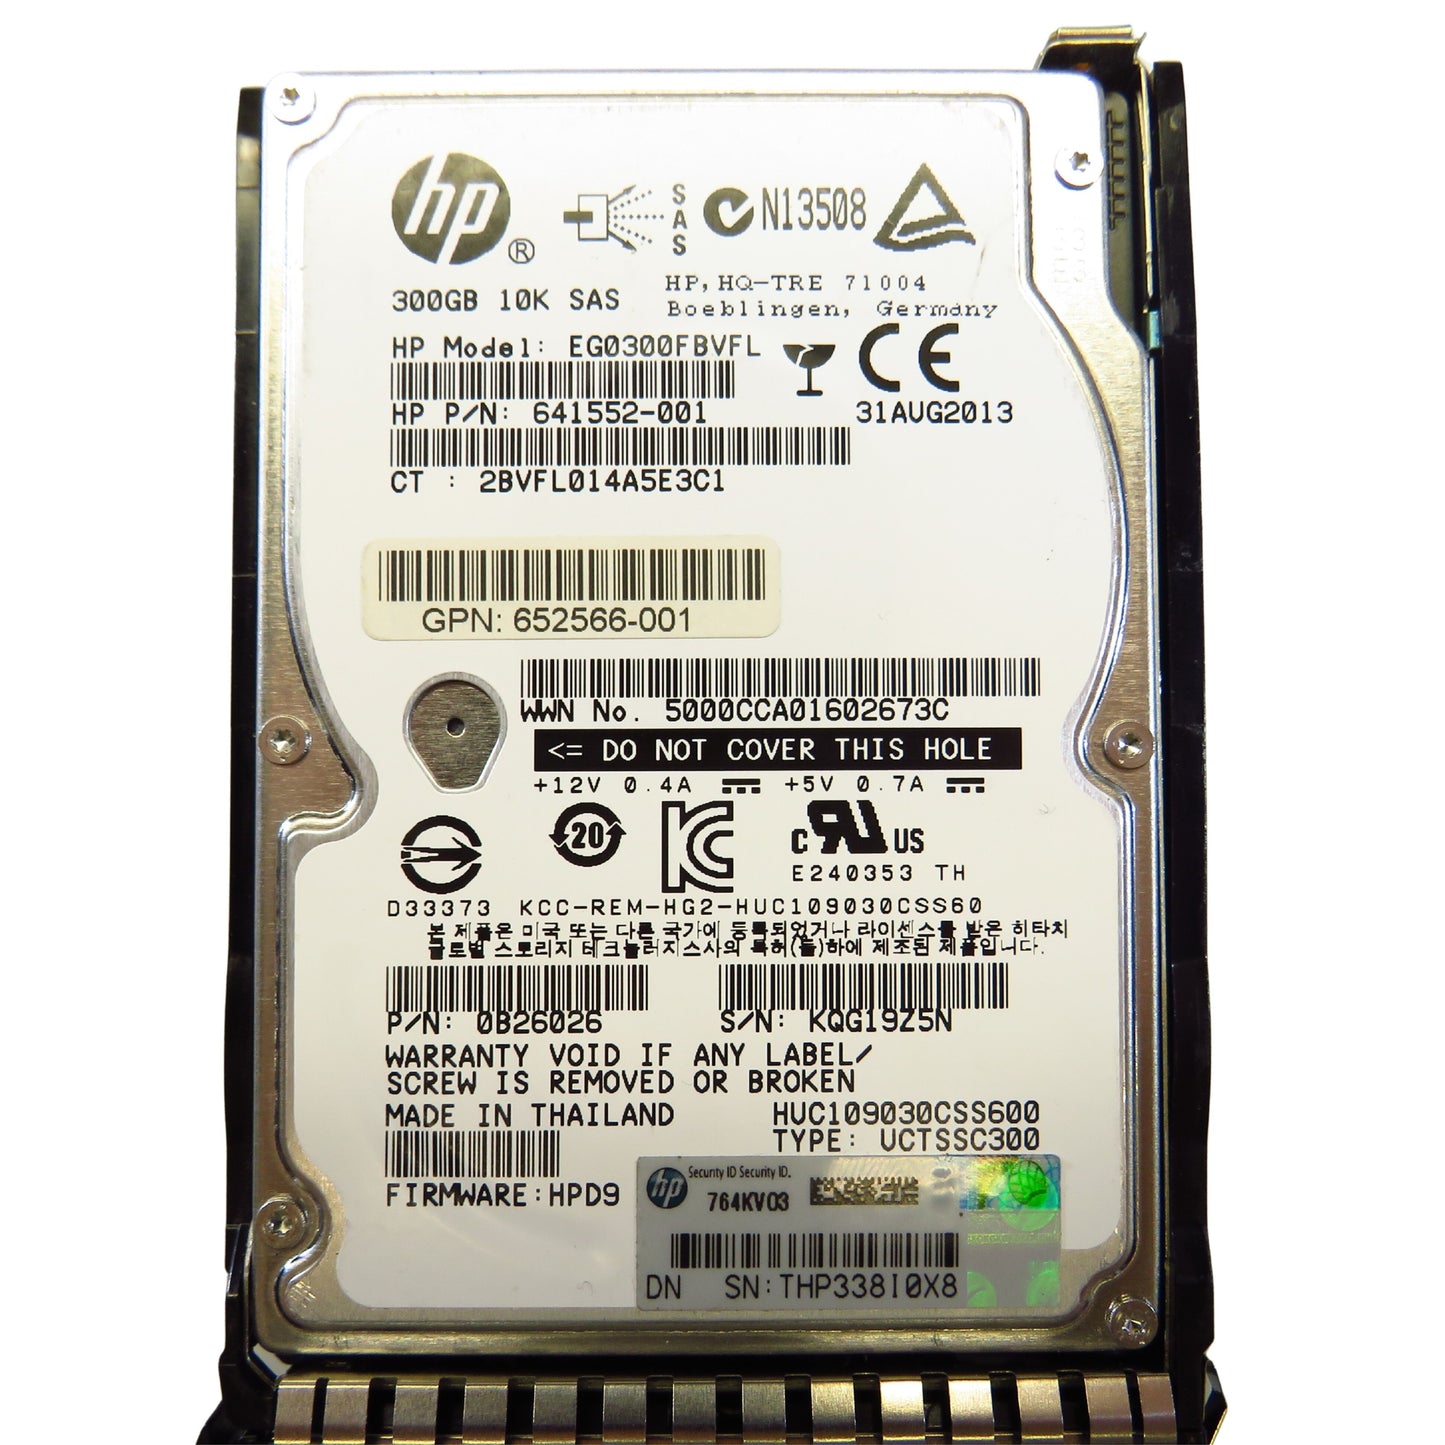 HP 653955-001 300GB 10K RPM 2.5" SAS 6Gbps HDD Hard Drive (Refurbished)